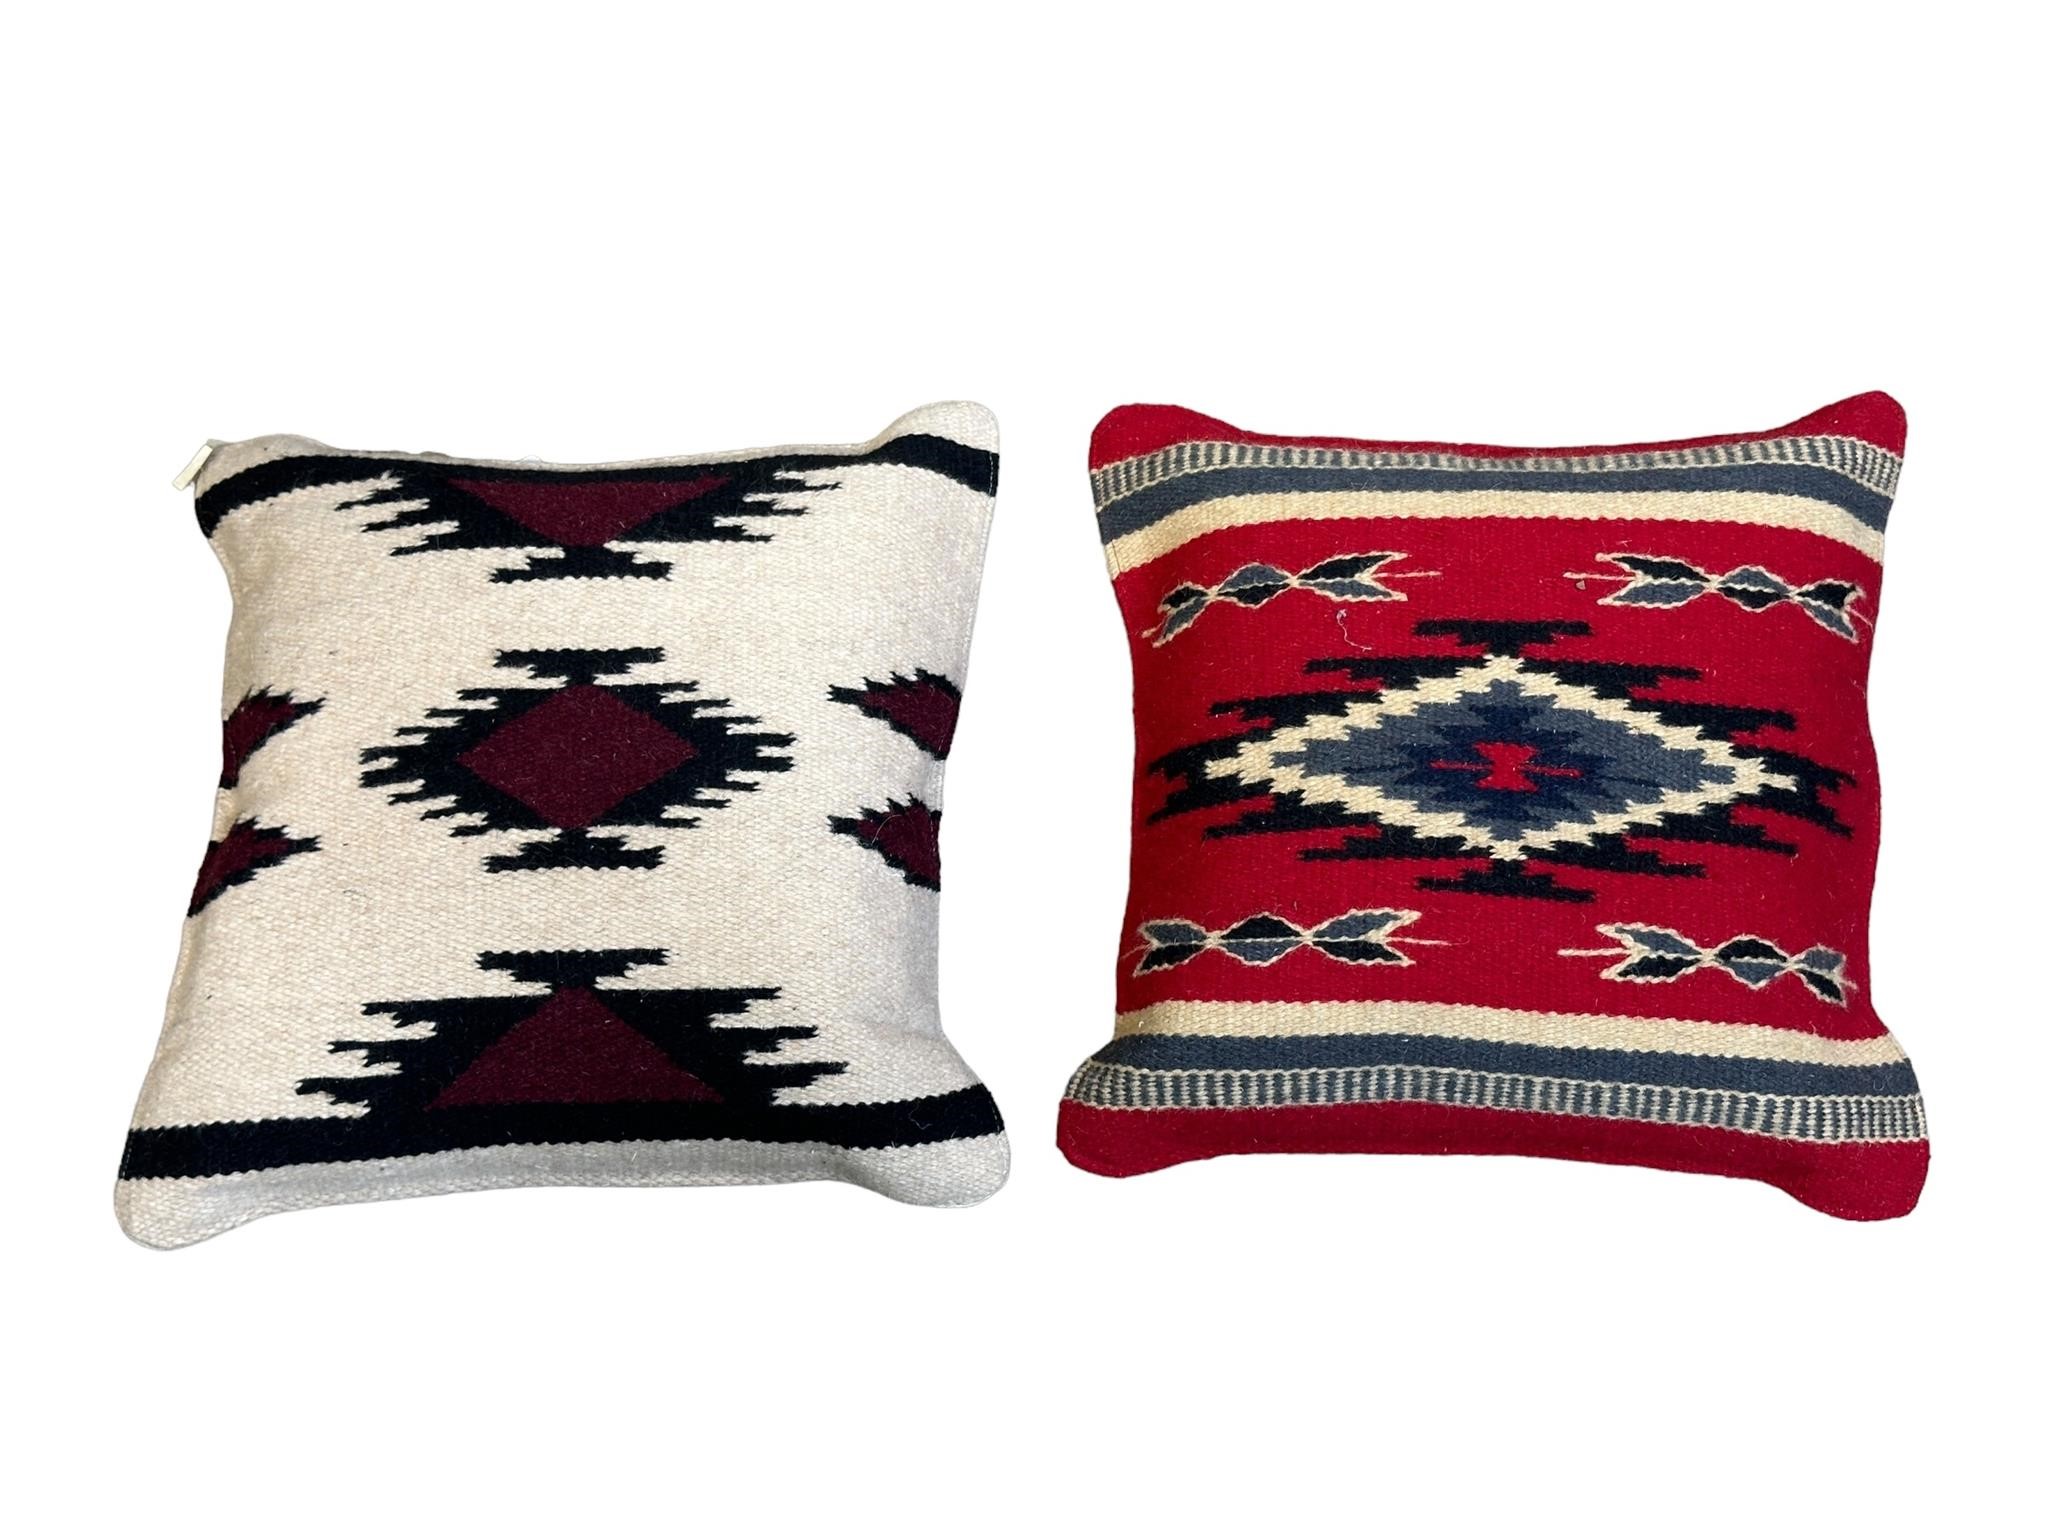 2 -Navajo Style Pillows